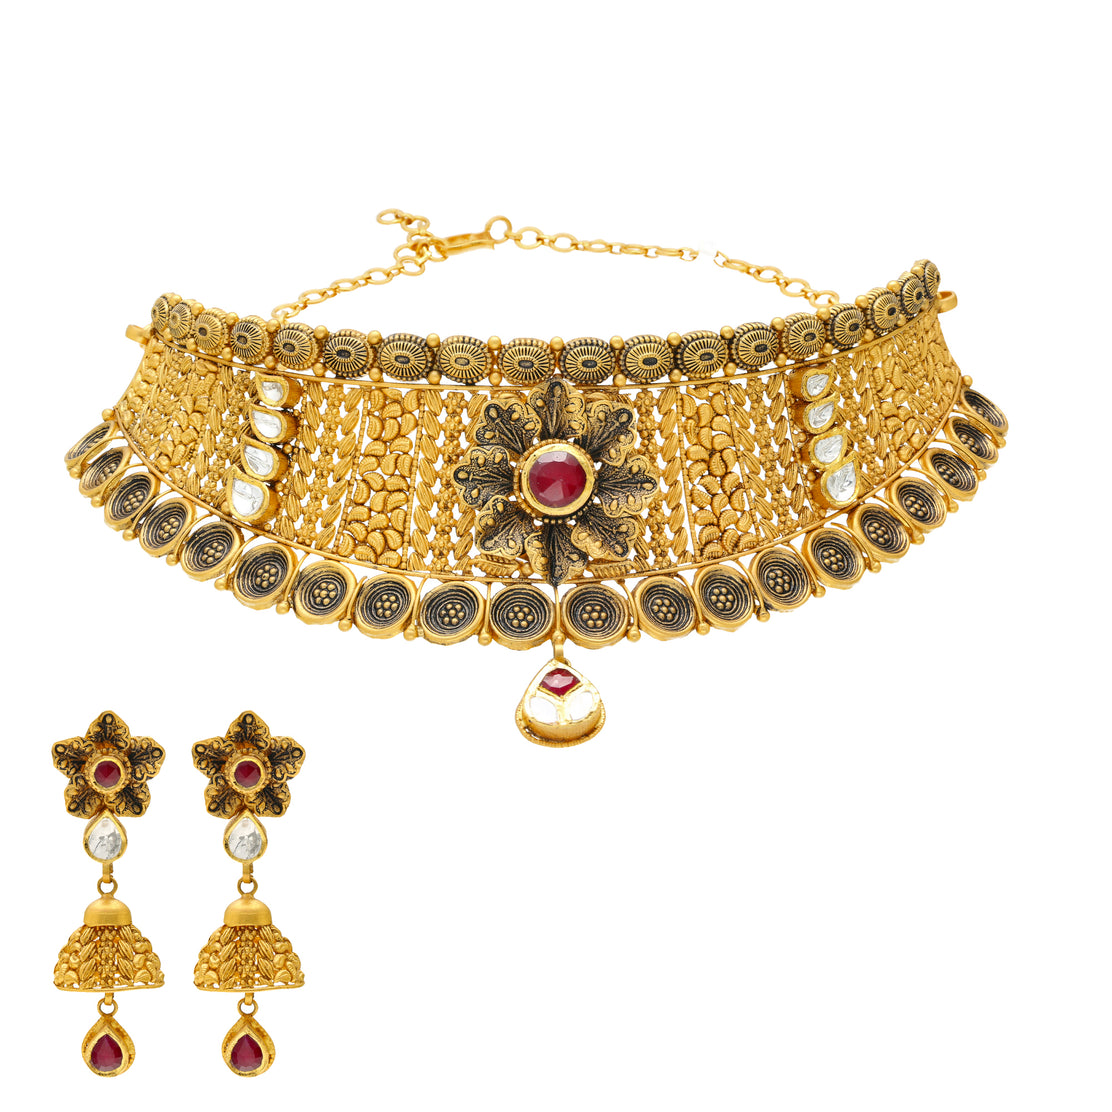 ela rae | libi choker necklace | women's designer fashion jewelry